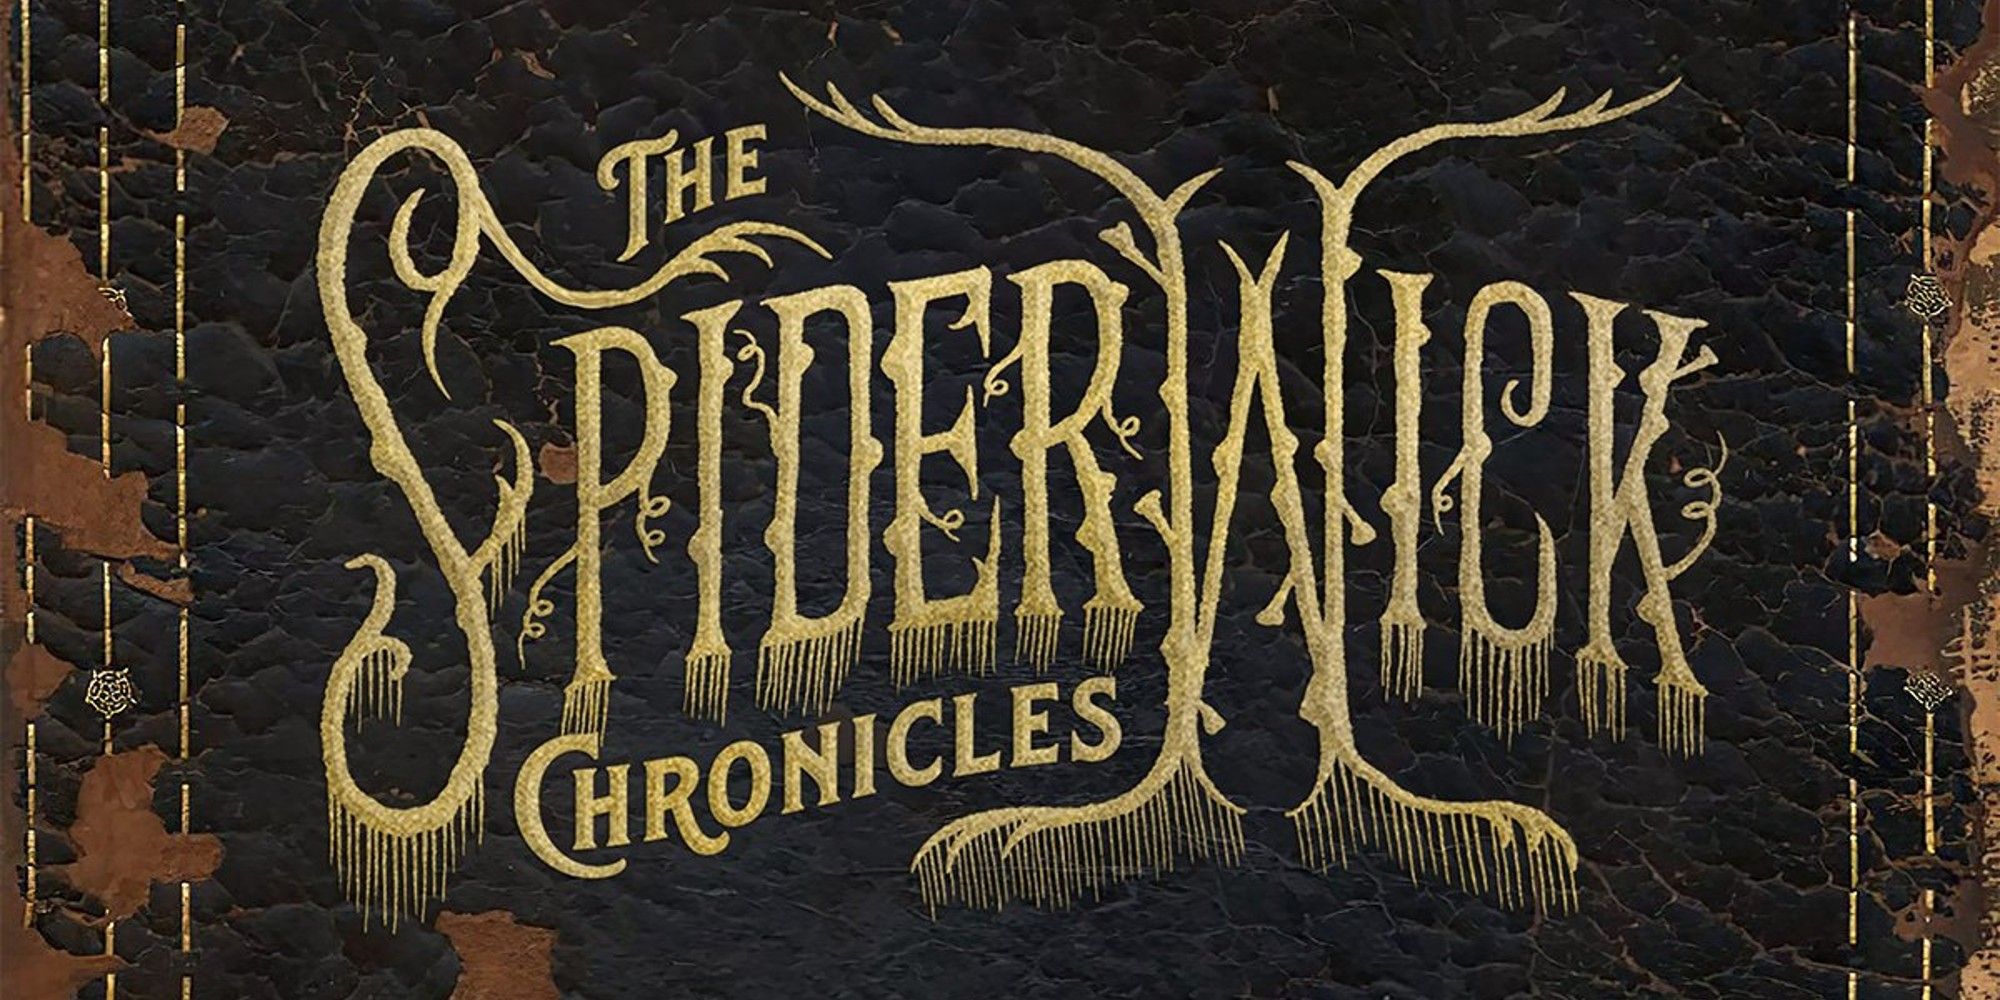 Spiderwick Chronicles Show In Development At Disney